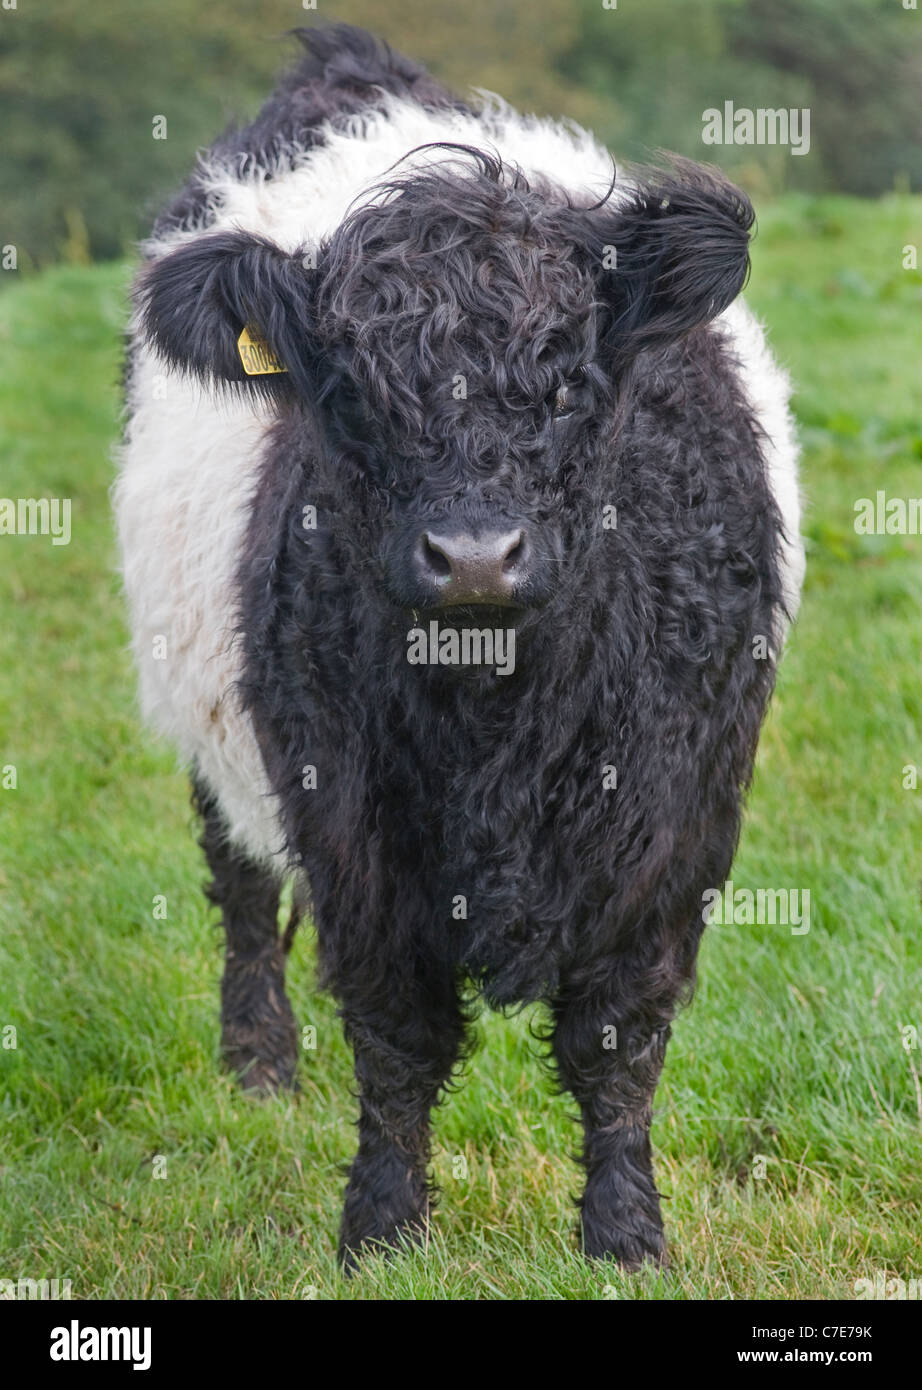 loan silhouette Beak Belted Galloway Cow Stock Photo - Alamy